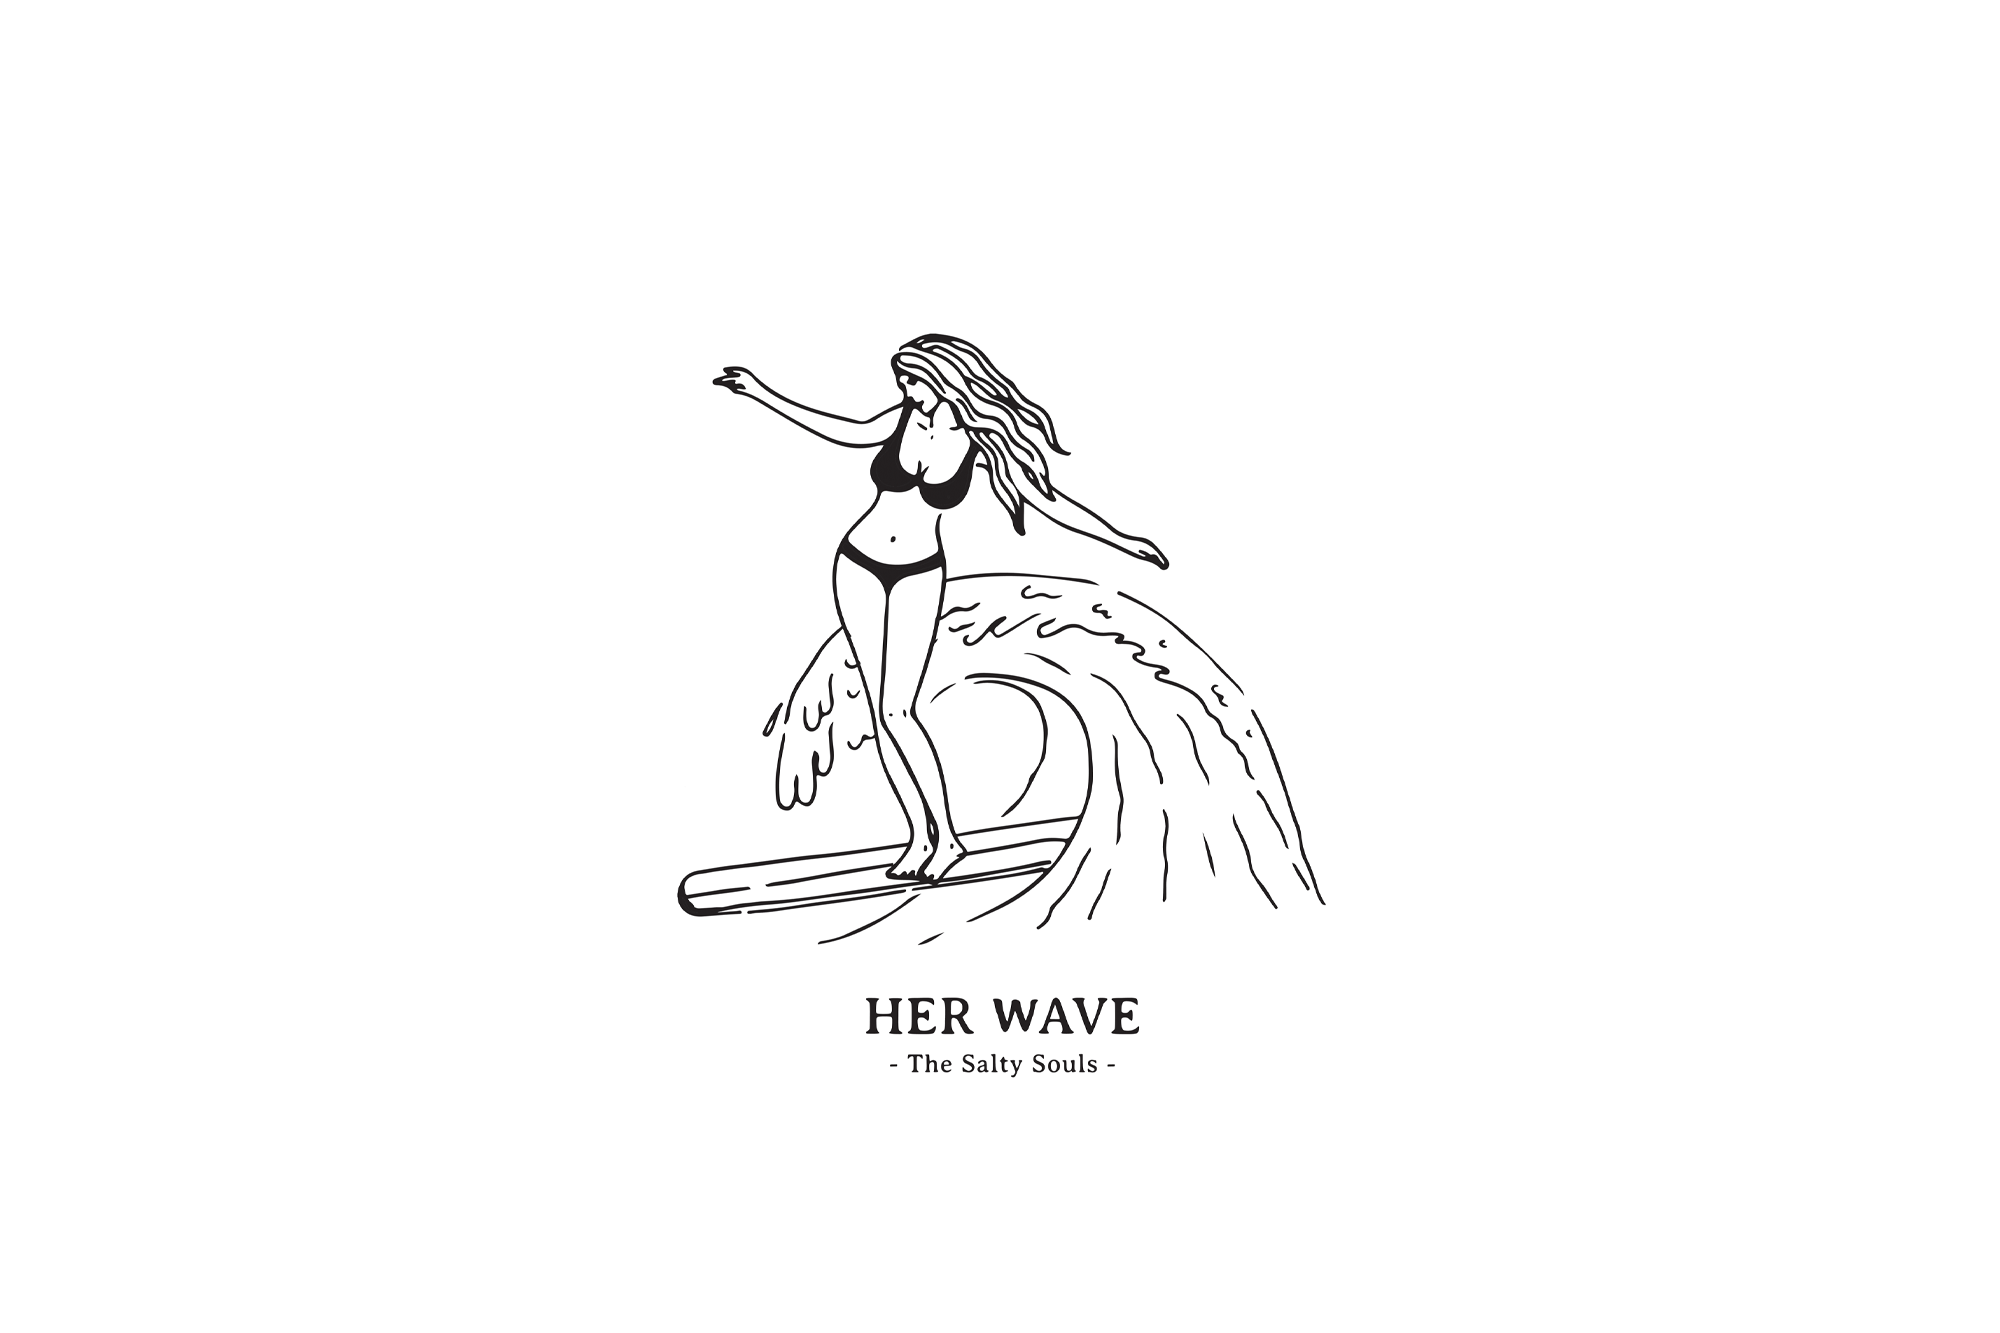 "HER WAVE" PRINT